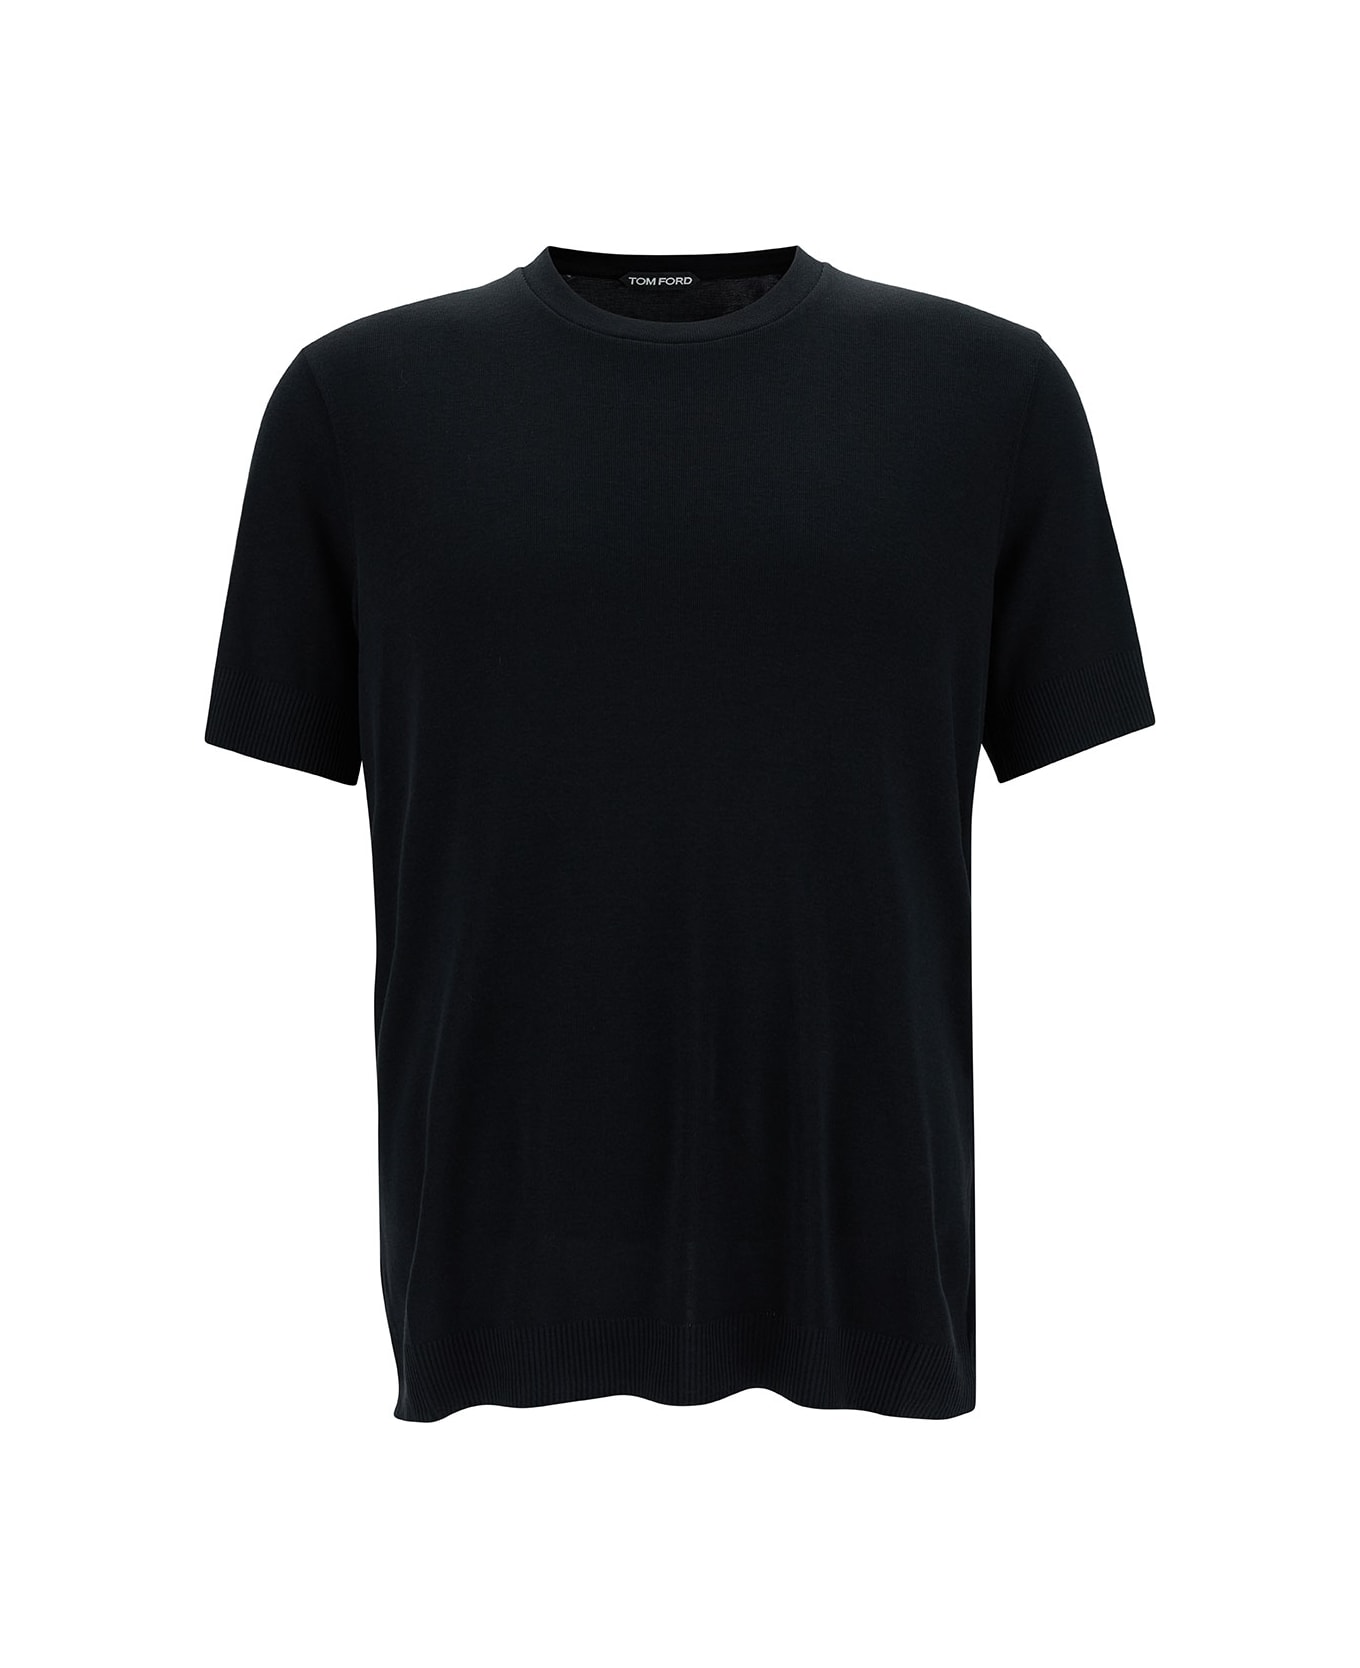 Tom Ford Black Crewneck T-shirt In Cotton Blend Man - Black